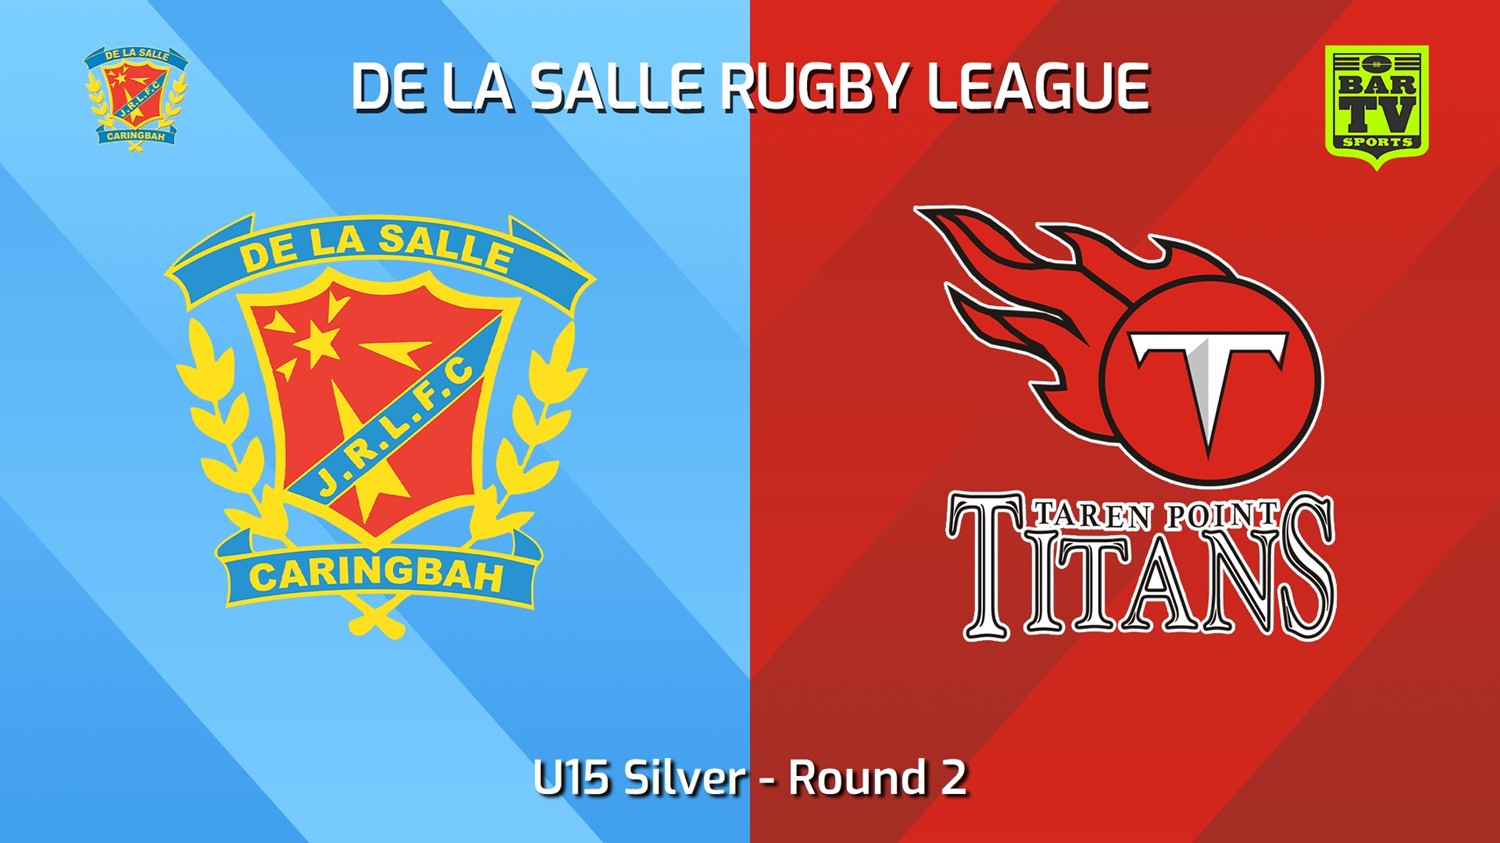 240428-video-De La Salle Round 2 - U15 Silver - De La Salle v Taren Point Titans Slate Image